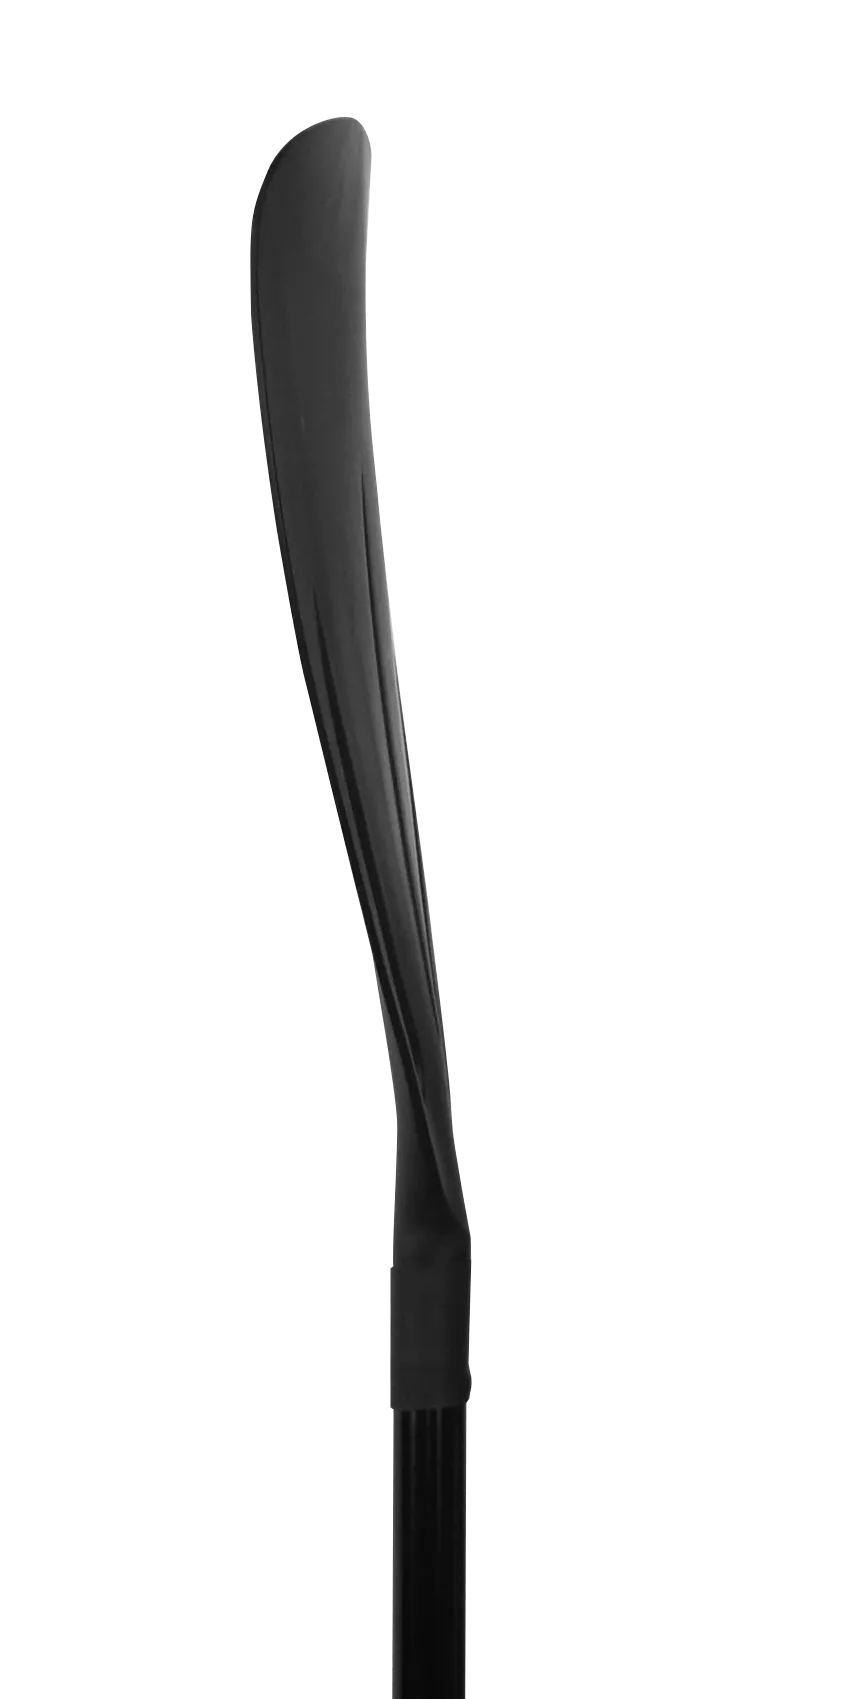 PELICAN - Vortex SUP Paddle 180-220 cm (70"-87") - Black - PS1113-1-00 - SIDE